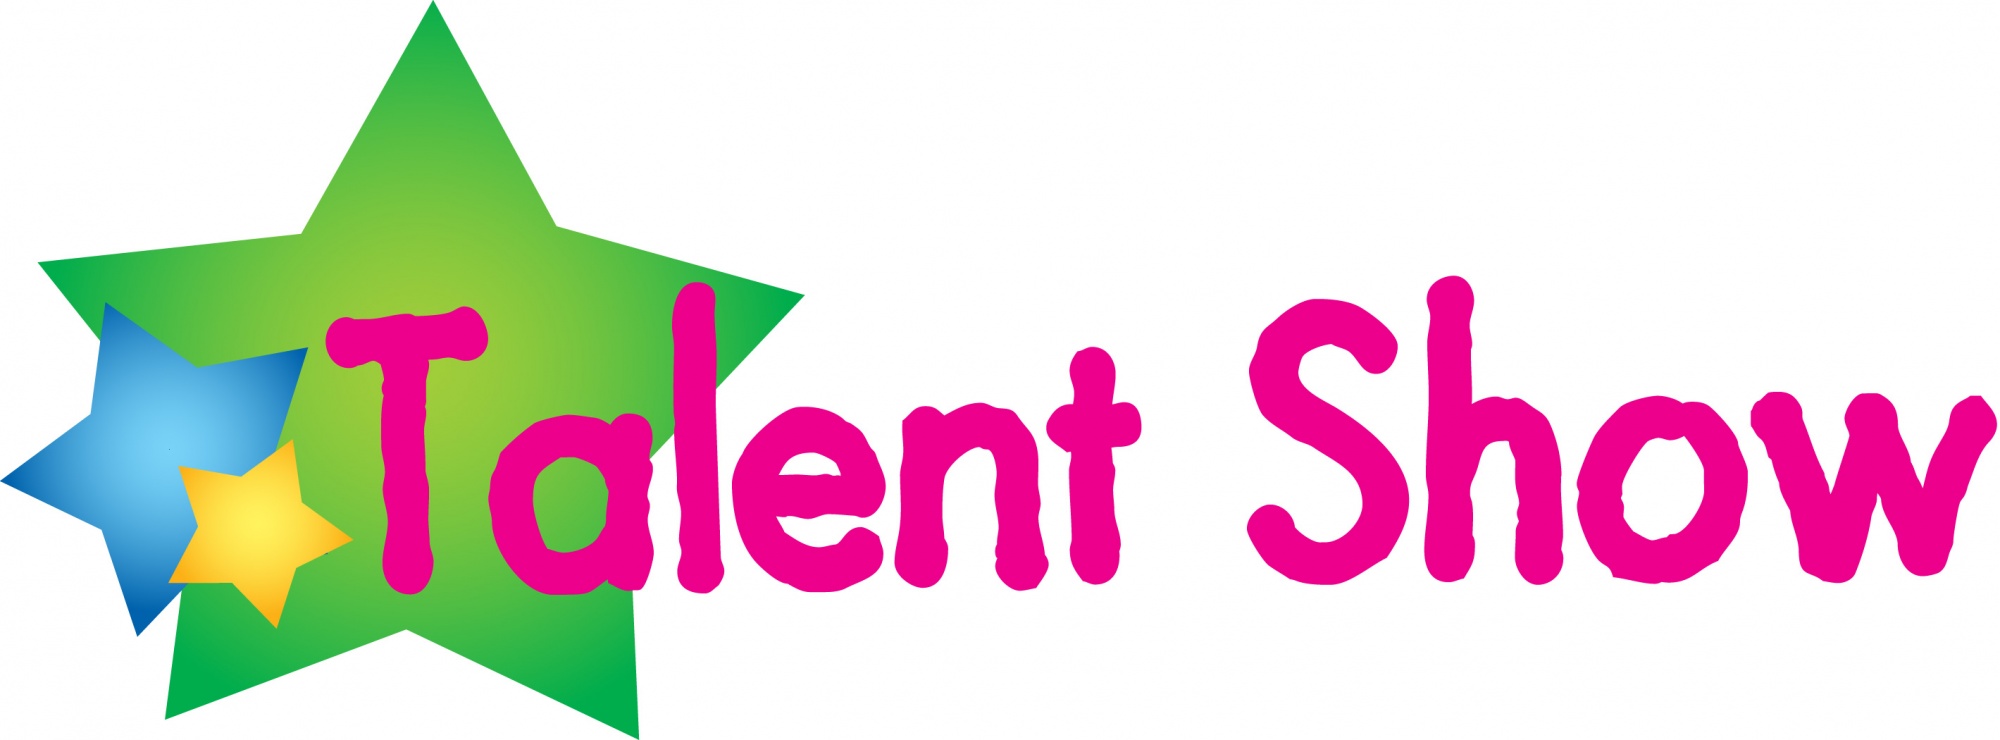 talent-show-program-template-cliparts-co